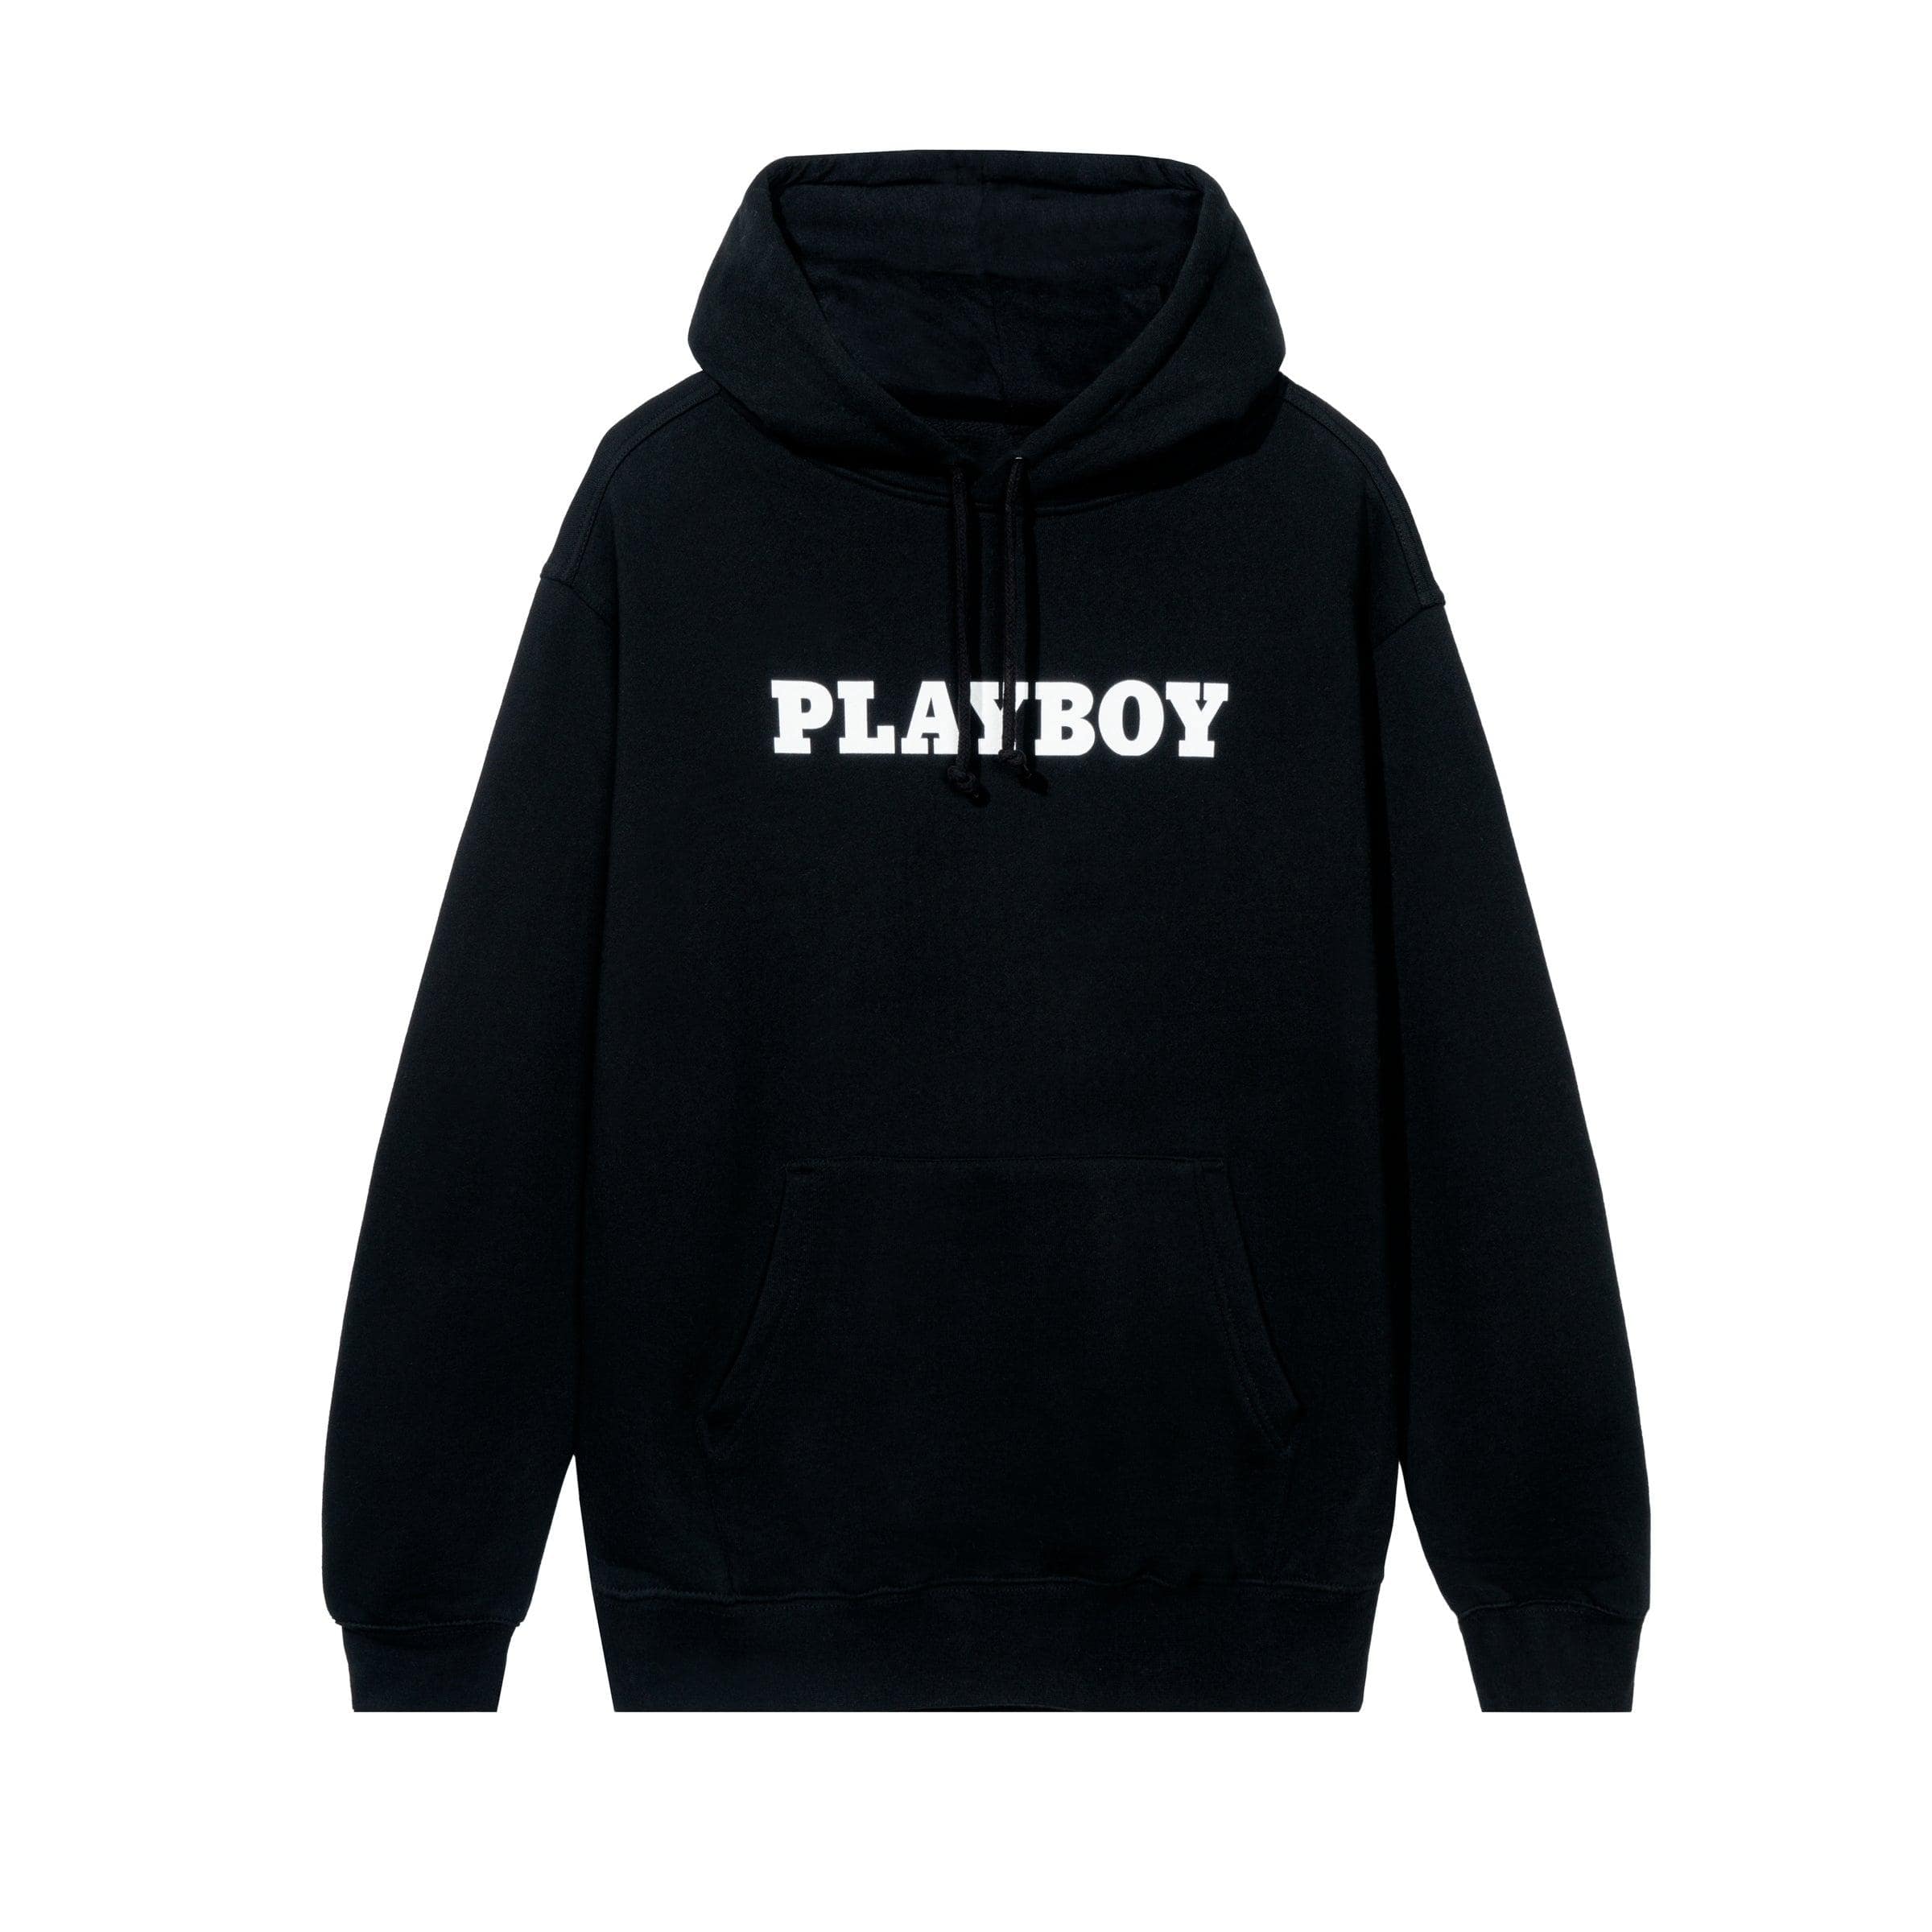 Playboy Sweatshirt - Mens | Crew Necks for Men from Playboy.com